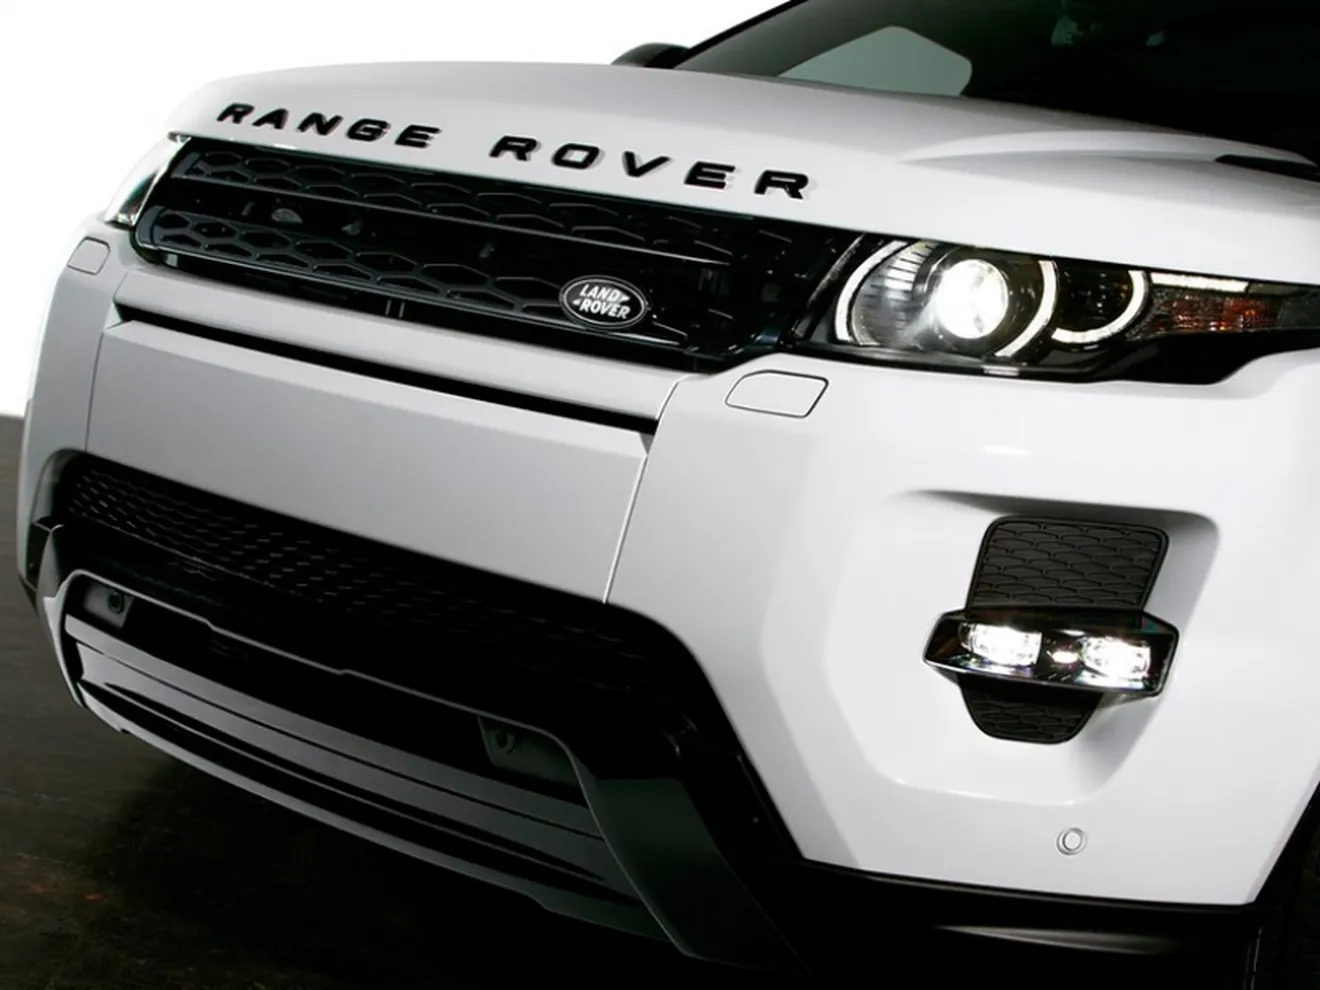 Range Rover Evoque, galardonado por su tecnología e innovación